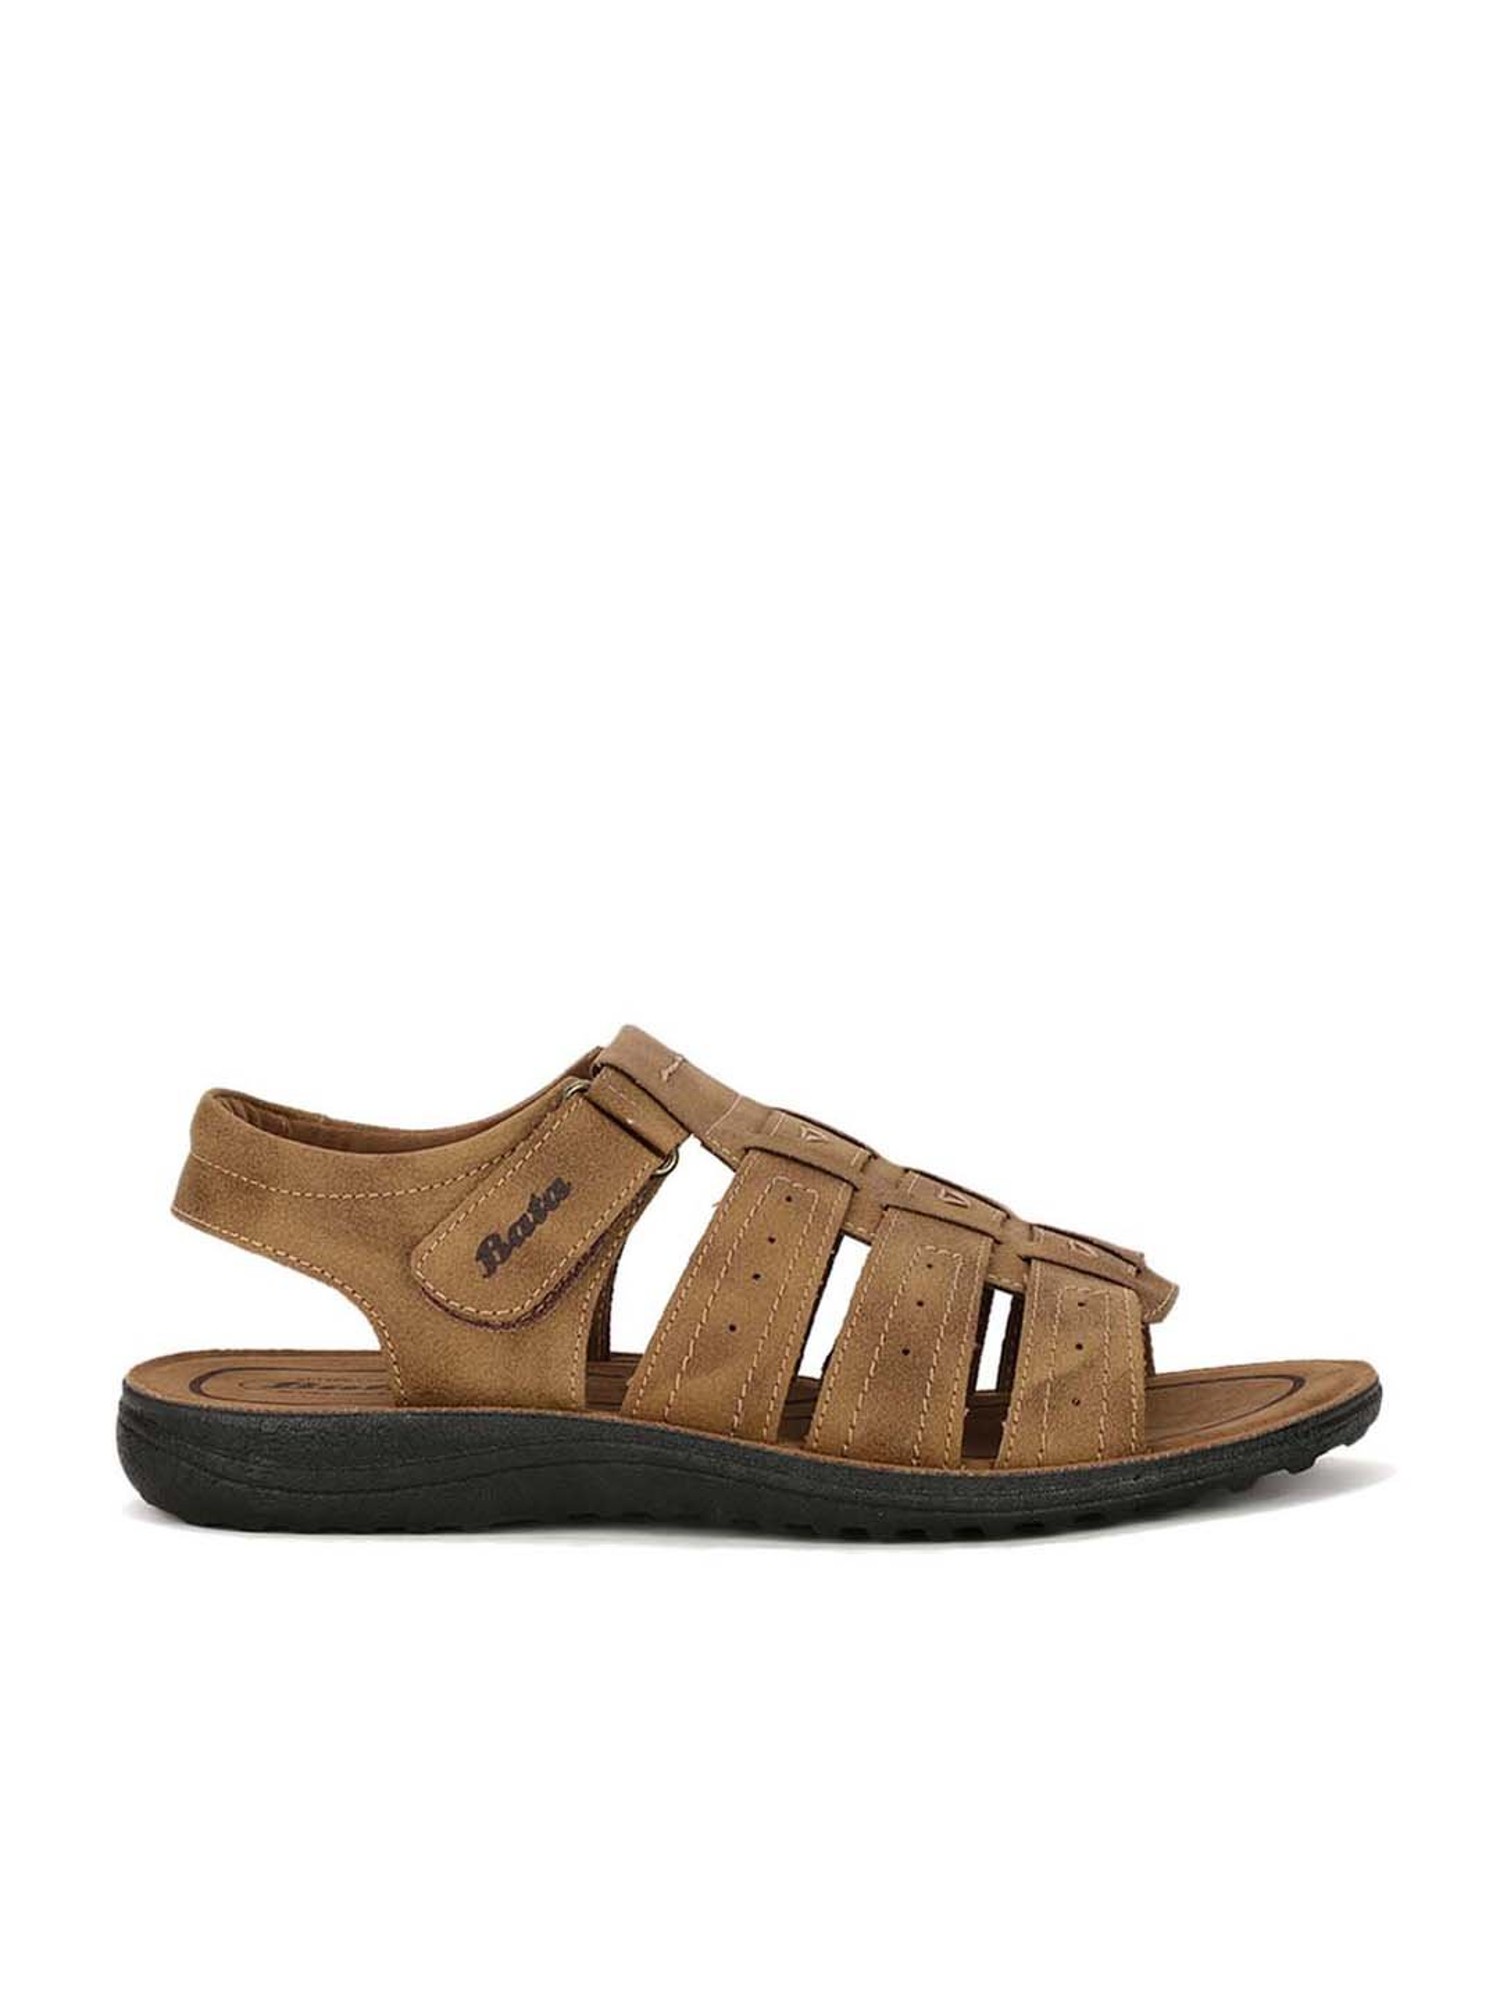 Buy Bata Brown Toe Ring Sandals for Men at Best Price @ Tata CLiQ-sgquangbinhtourist.com.vn